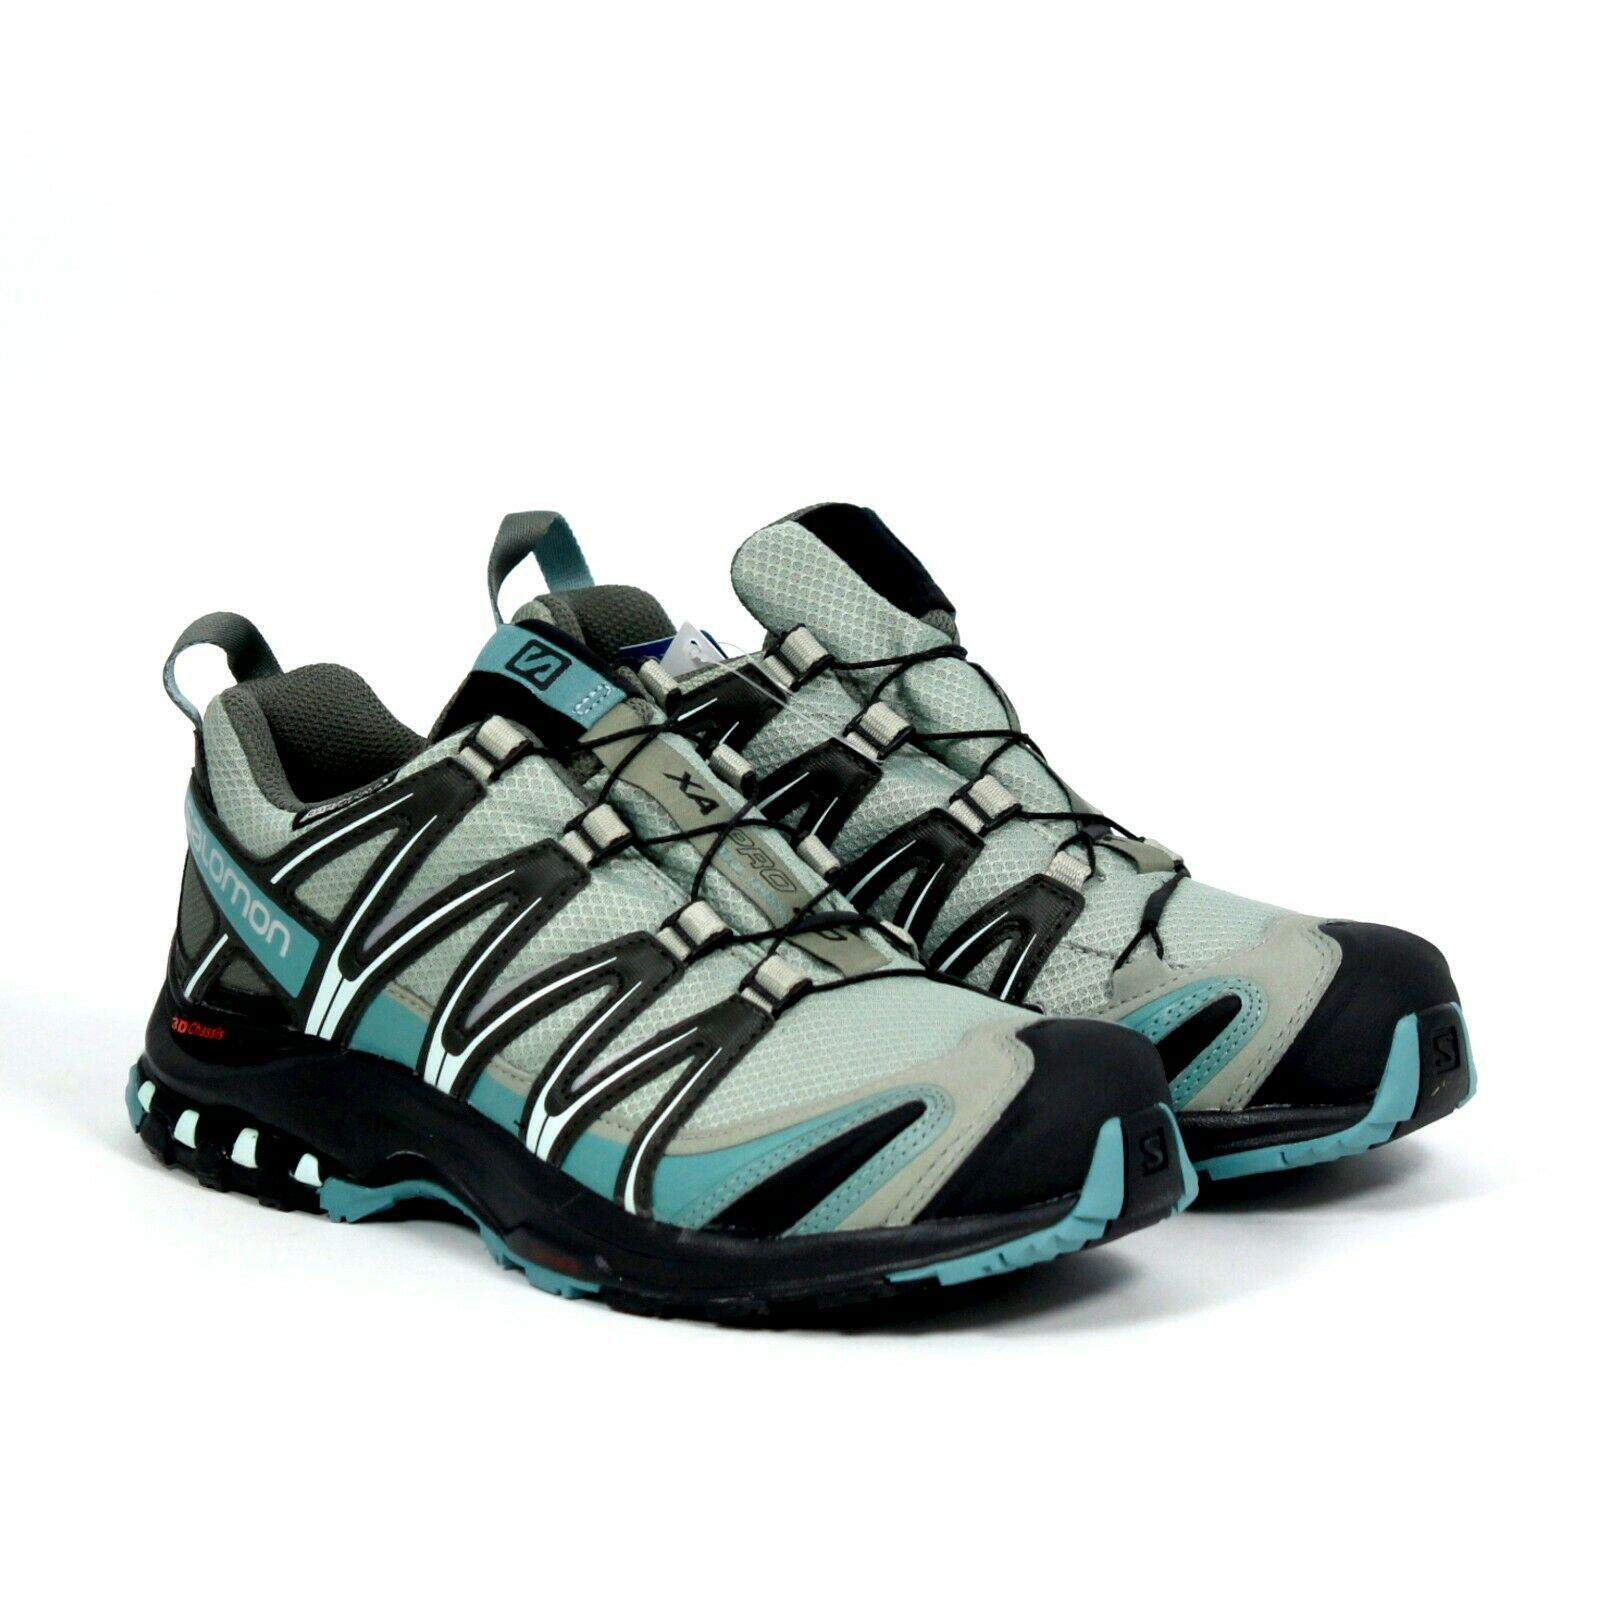 Salomon Womens XA Pro 3D Trail Running Low Top Shoes Shadow Artic Size 6